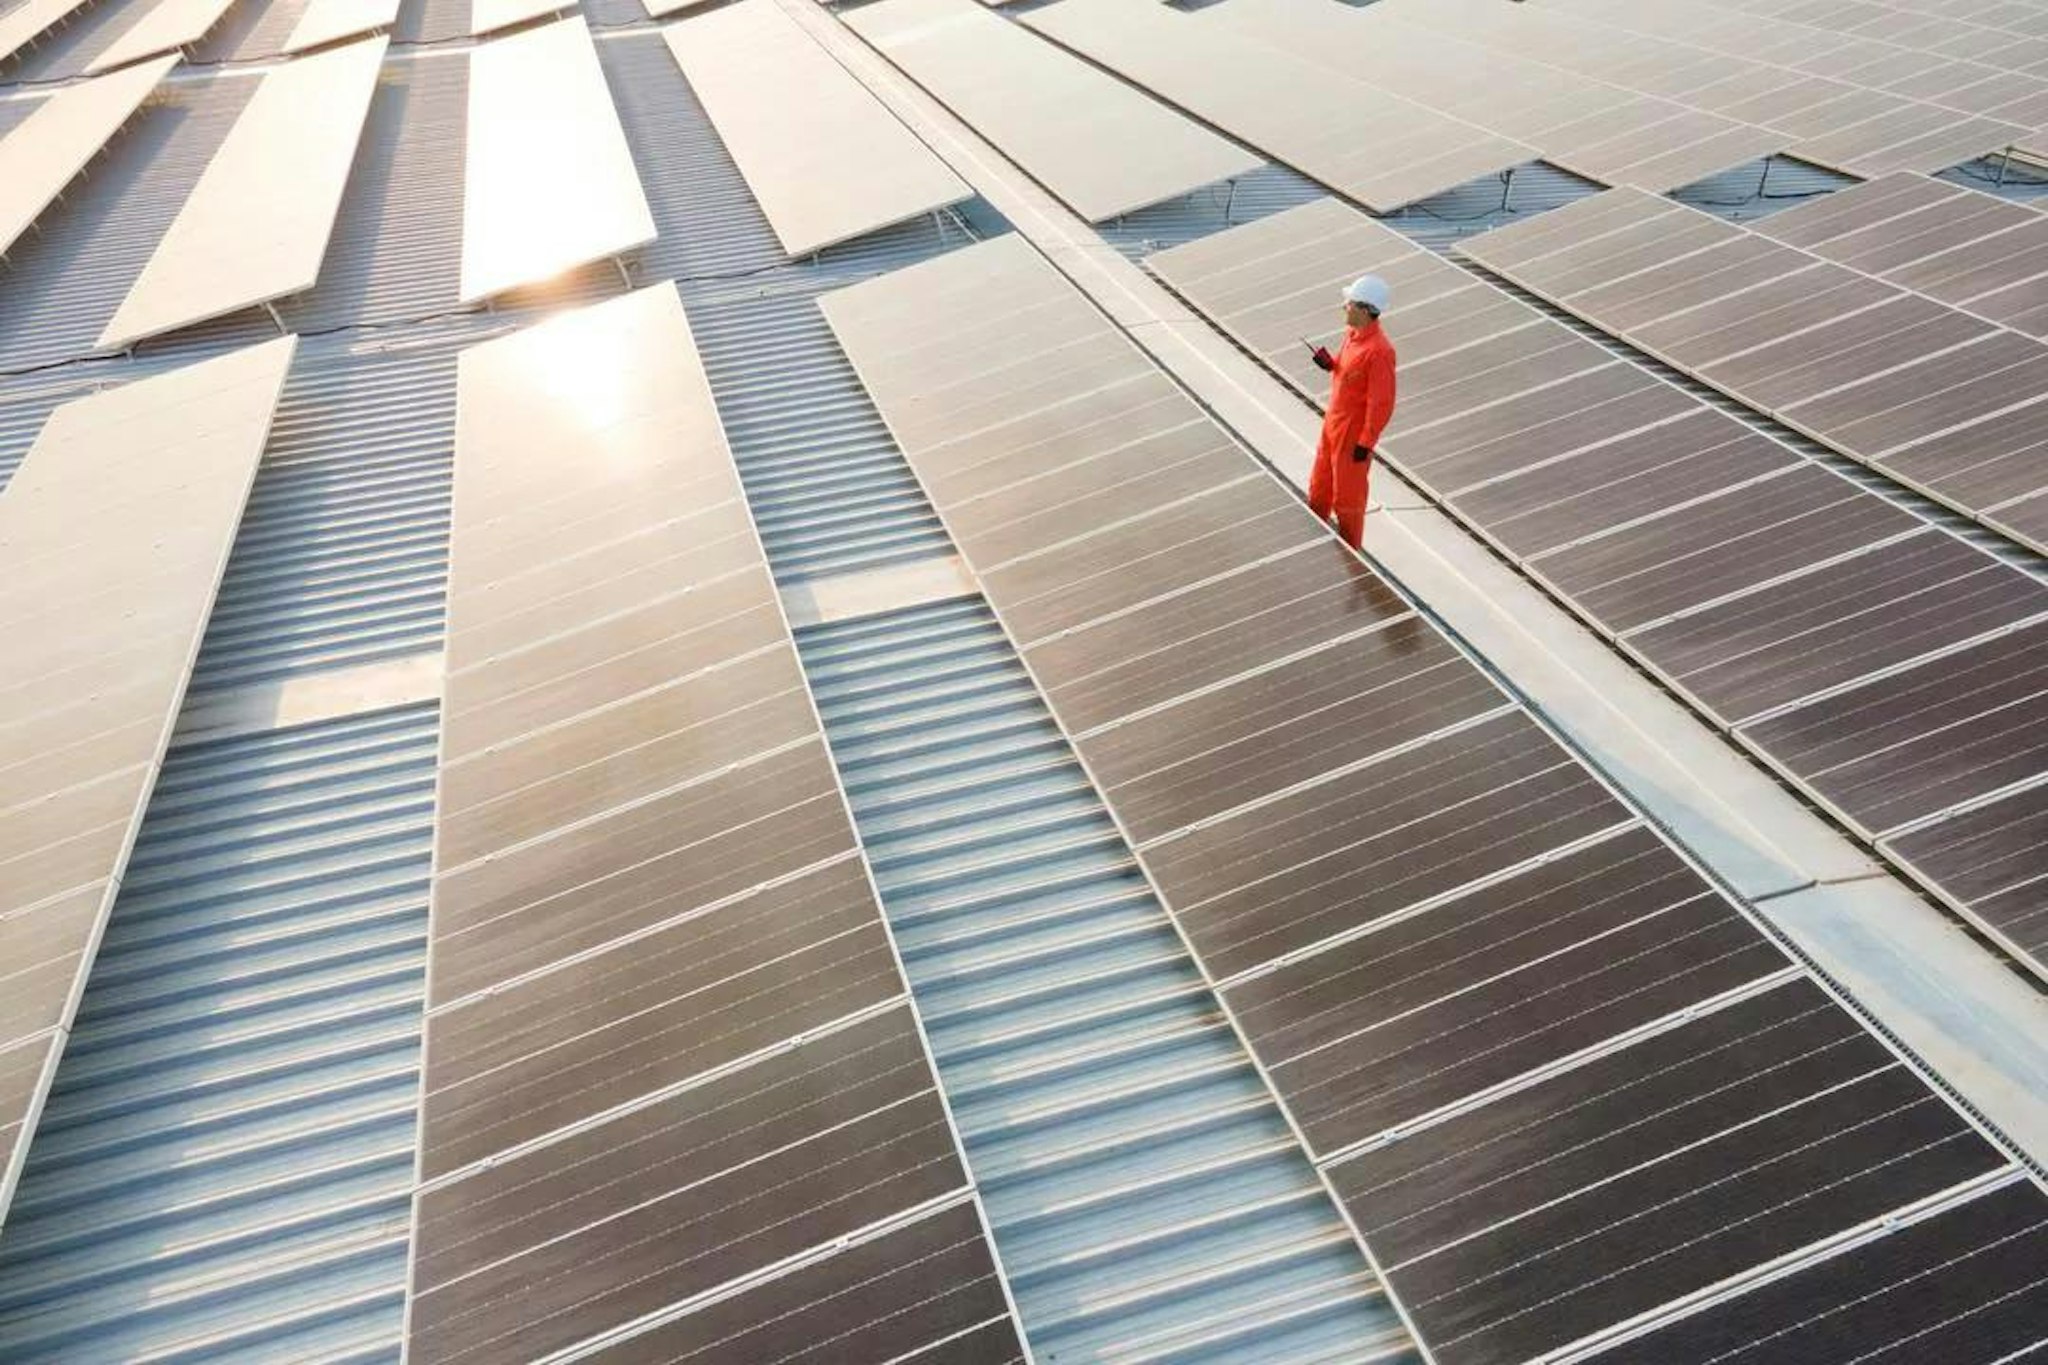 Solar panels representing ESG and the triple bottom line